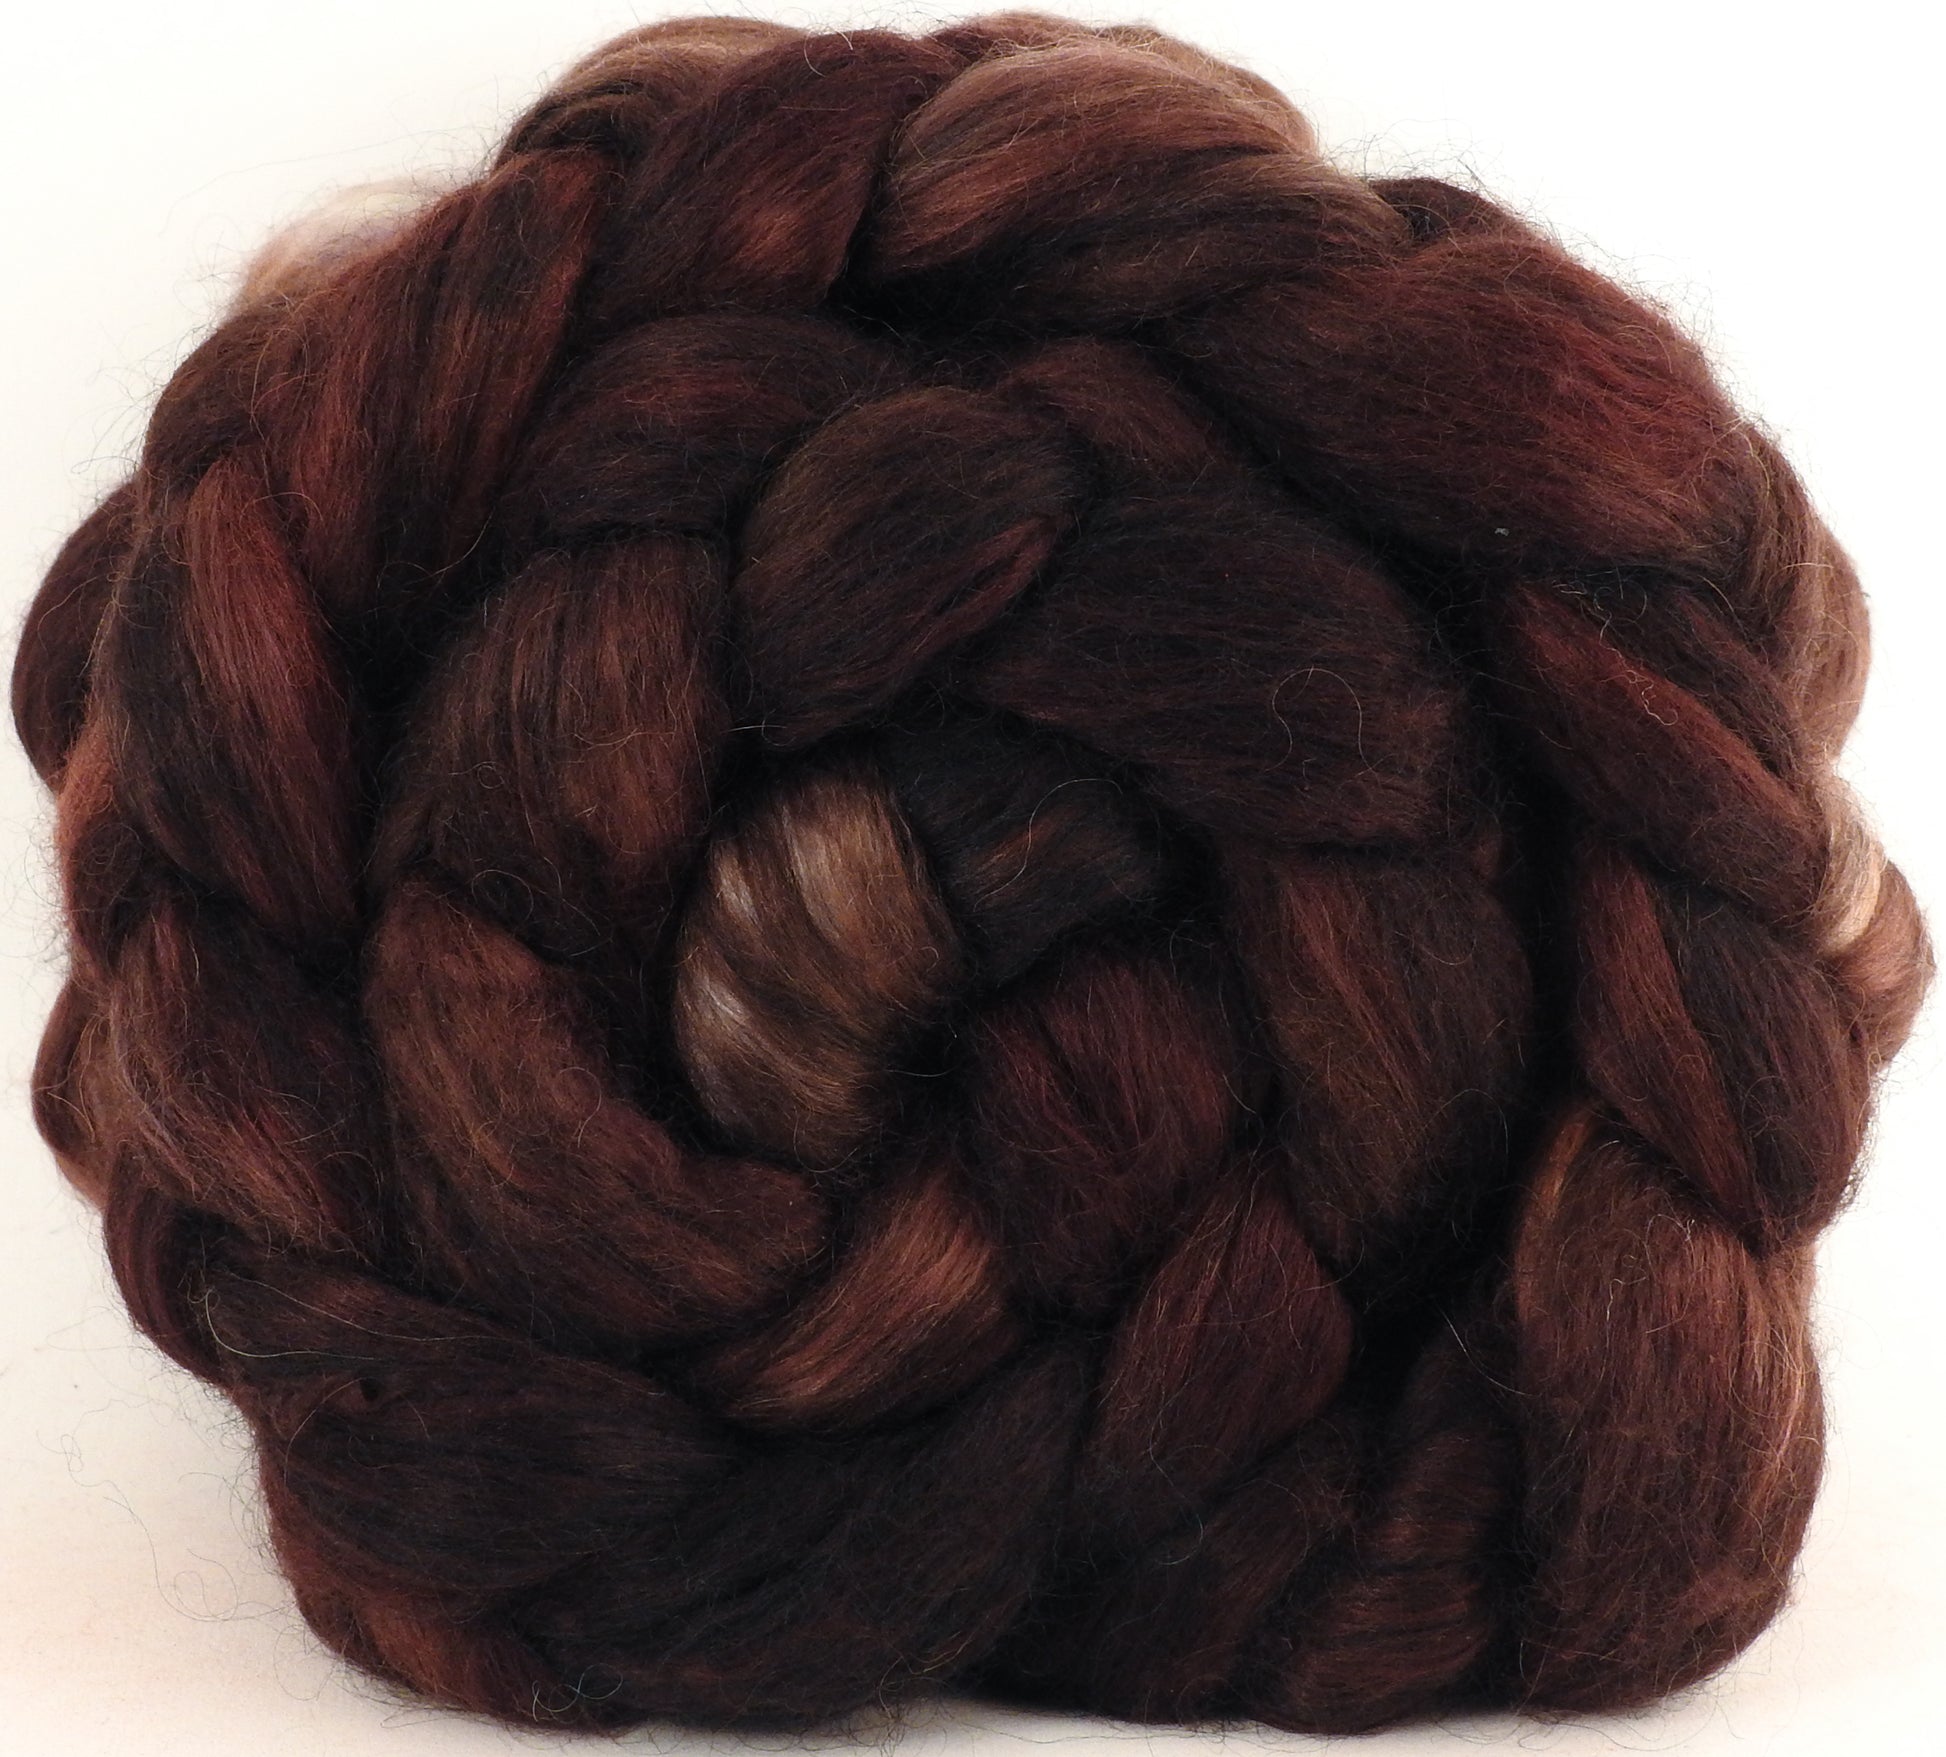 Hand-dyed wensleydale/ mulberry silk roving (65/35) - Coffee Grounds - Inglenook Fibers